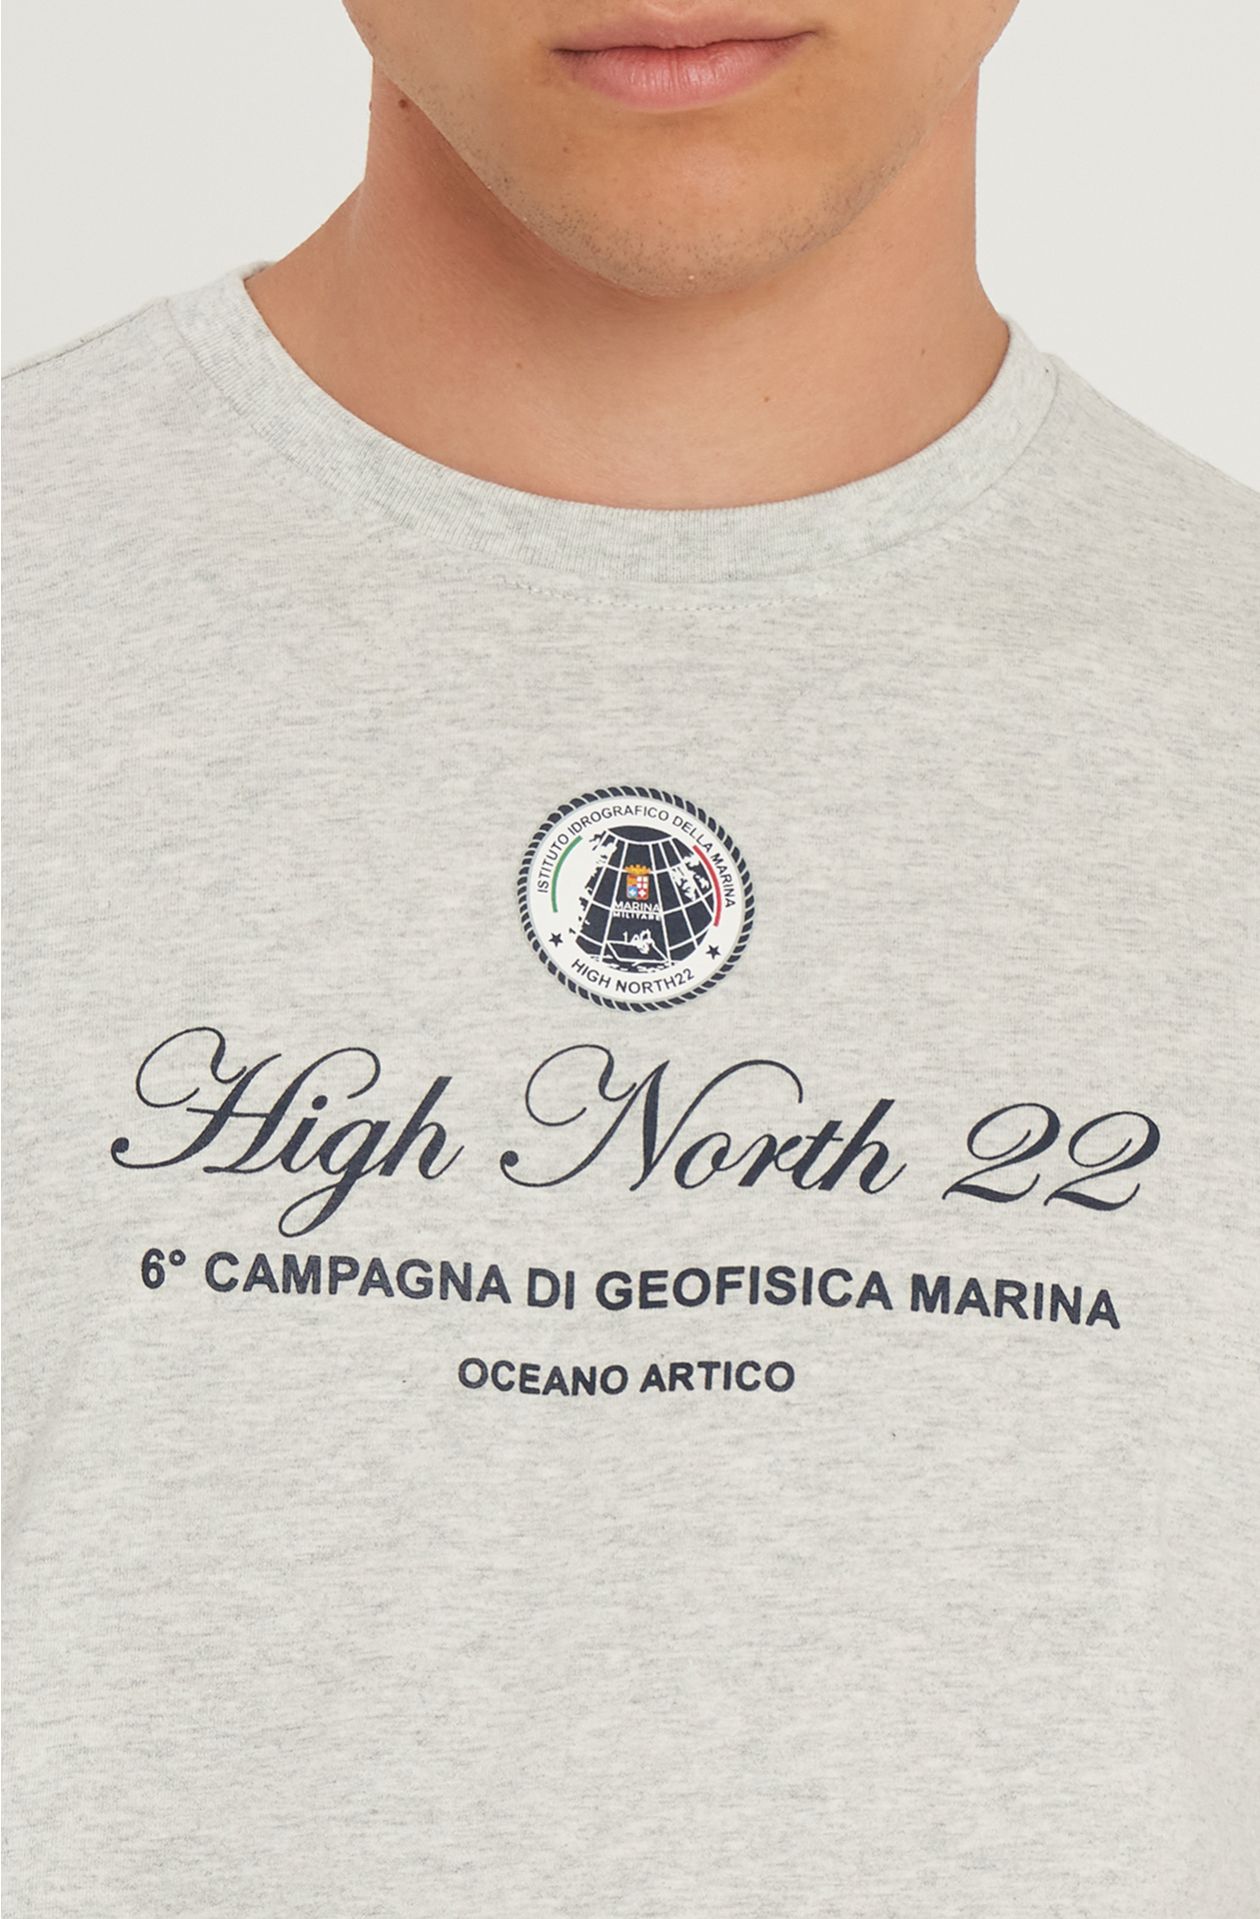 High North22 pure cotton T-shirt